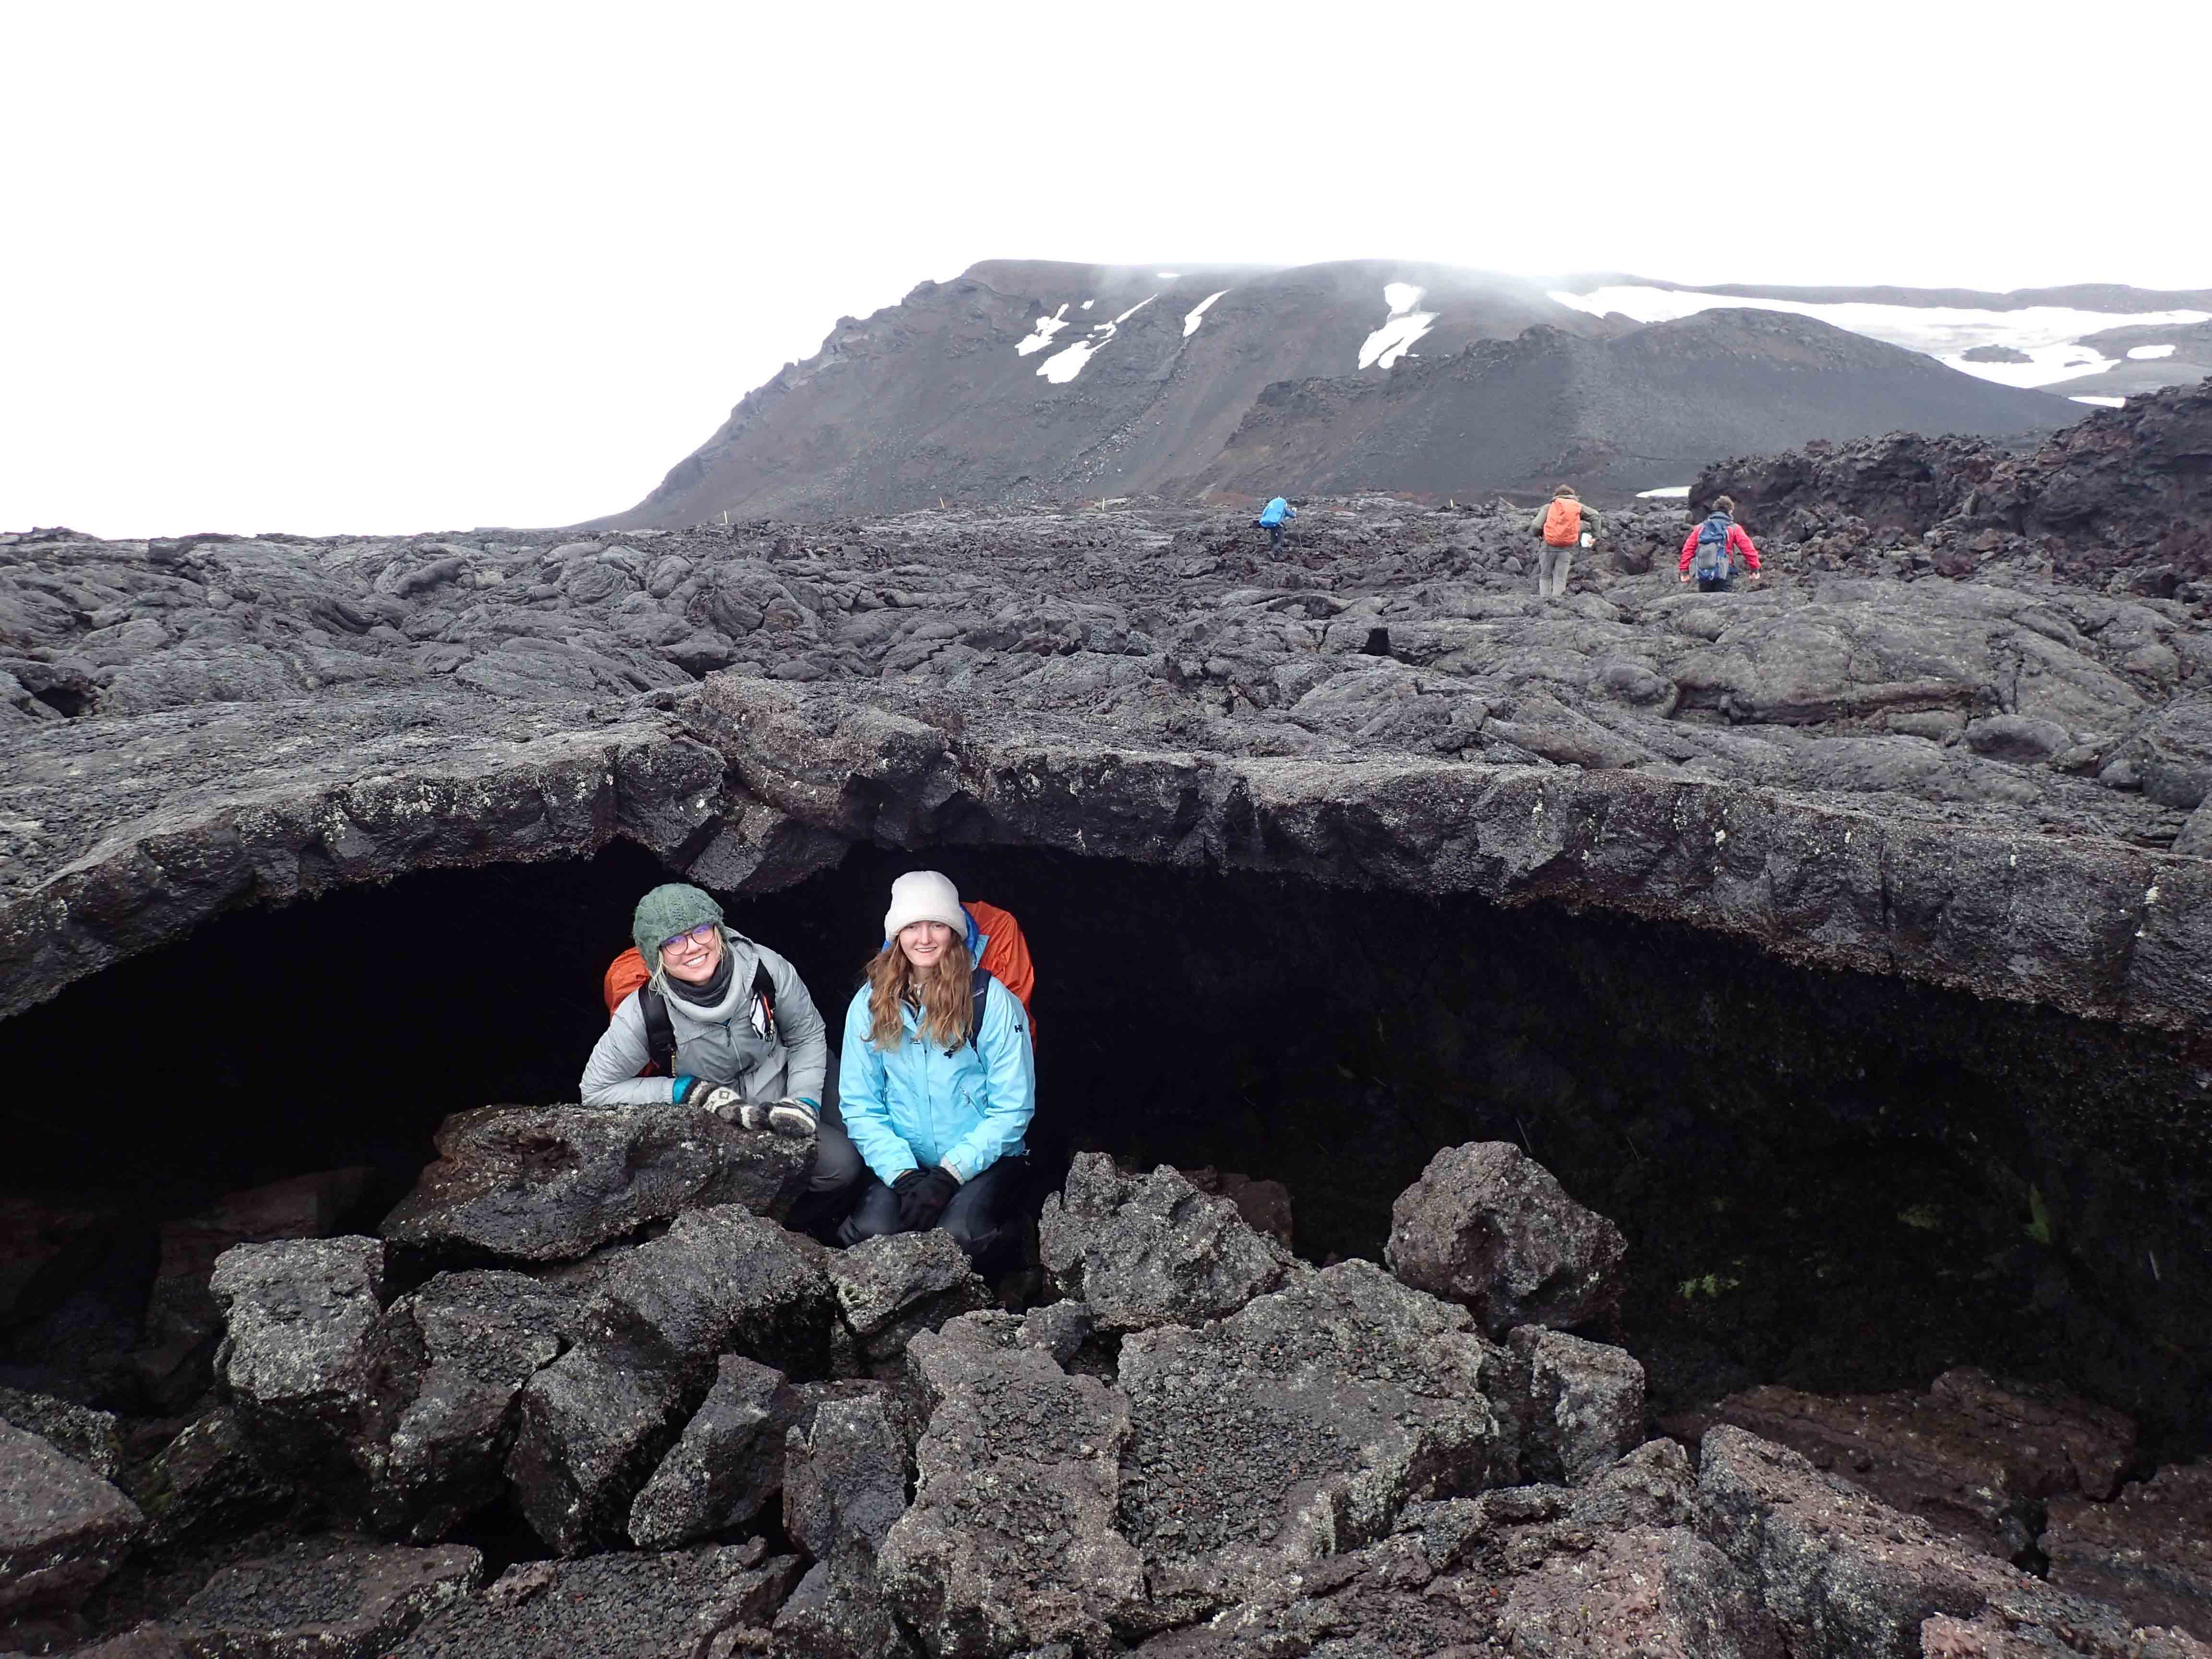 Cecelia Palmquist ’20 and Agata Benbenek ’20 in a “lava tube” at Askja Caldera, Iceland